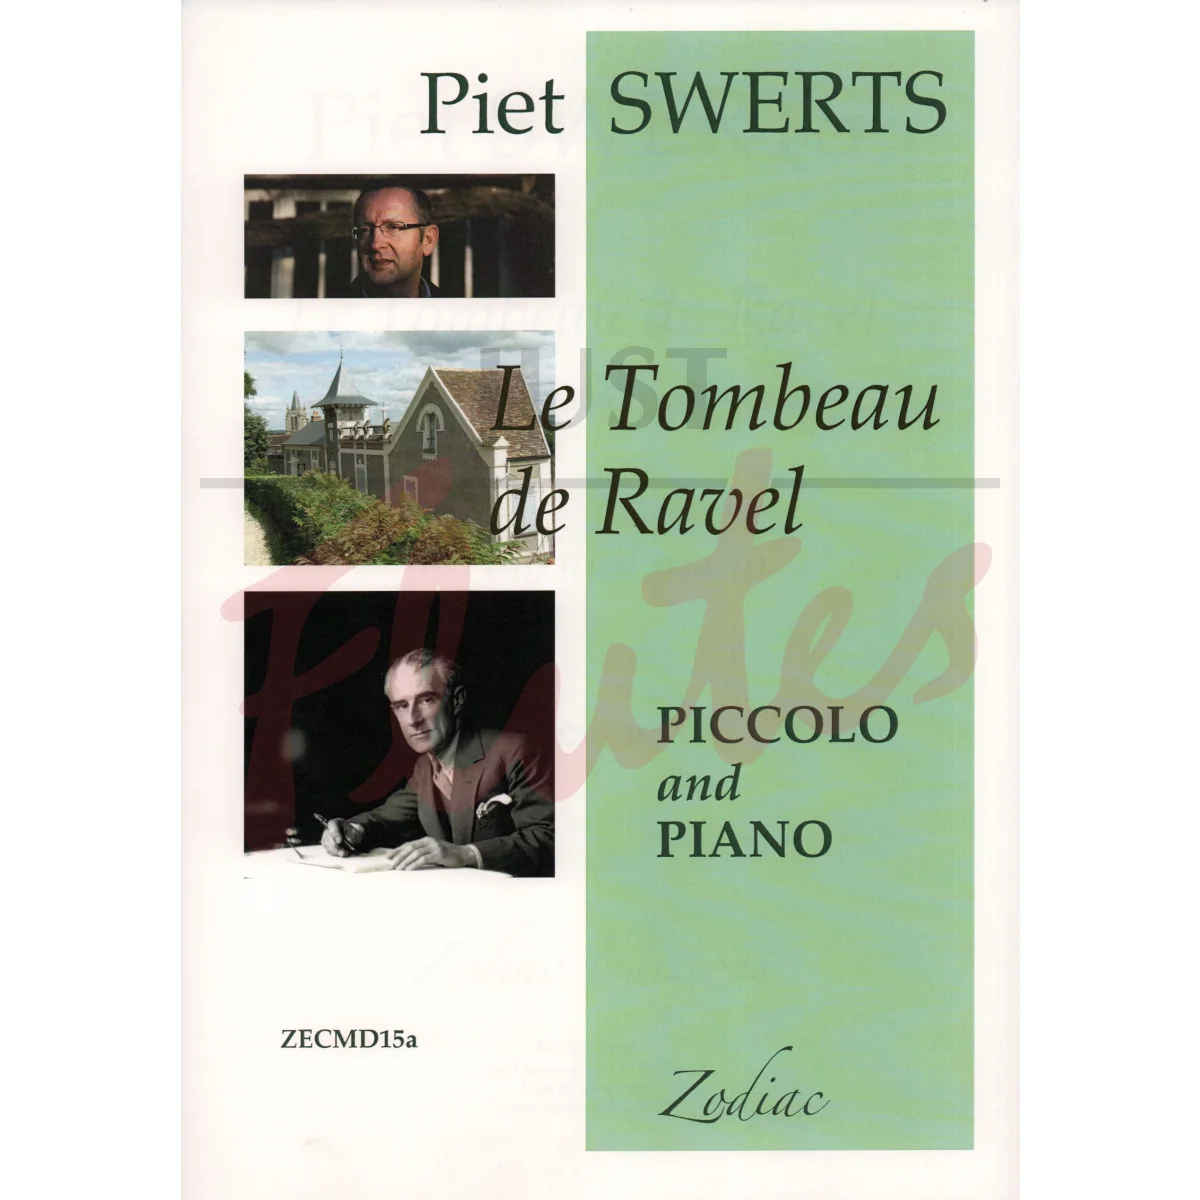 Le Tombeau de Ravel for Piccolo and Piano